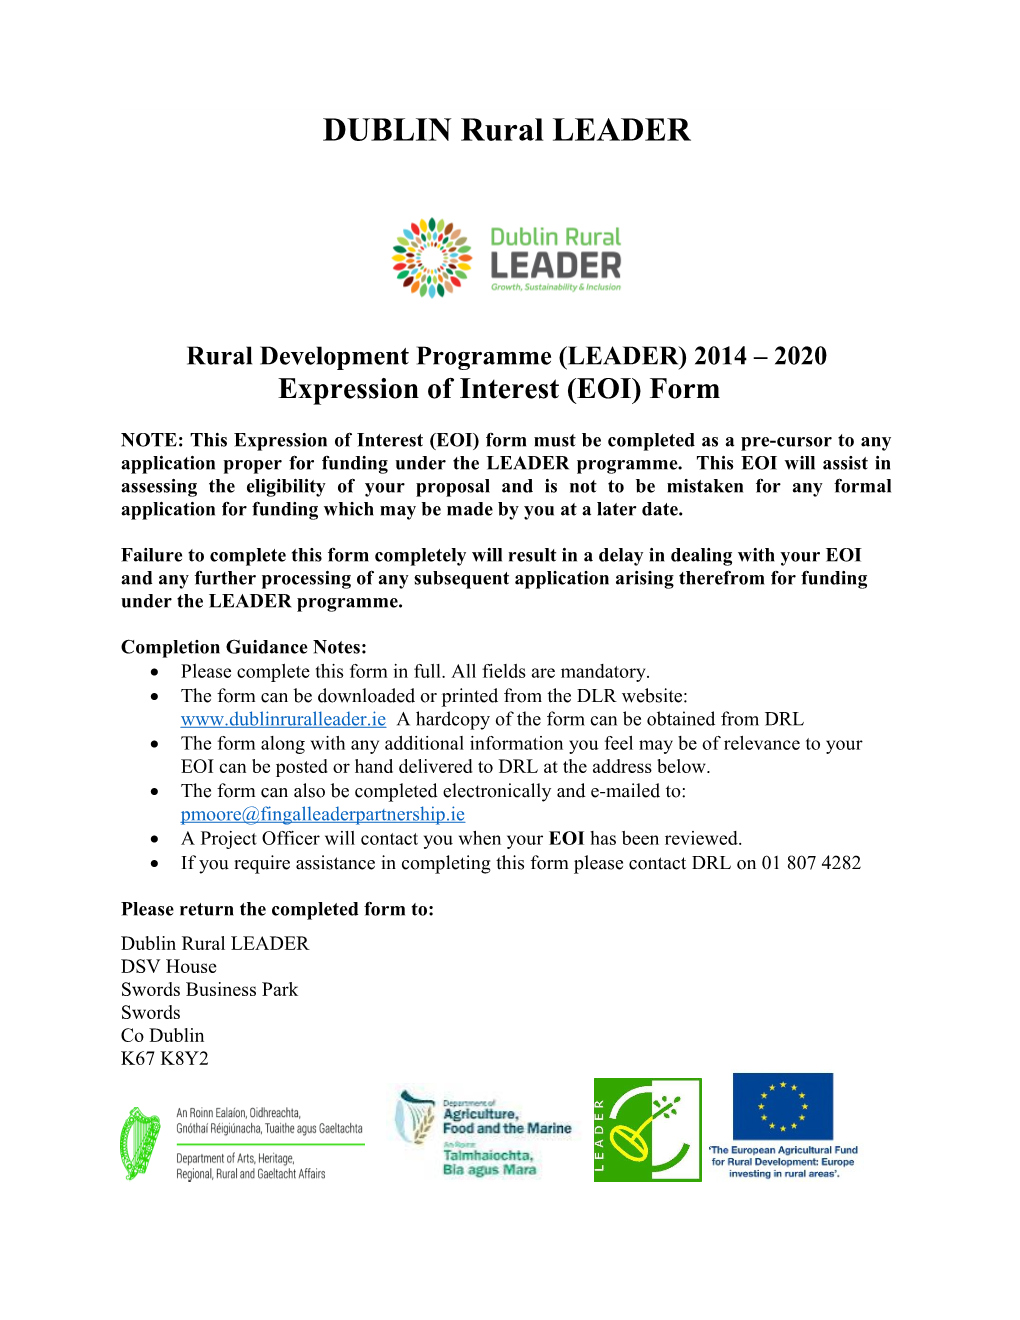 Rural Development Programme (LEADER) 2014 2020Expression of Interest (EOI) Form